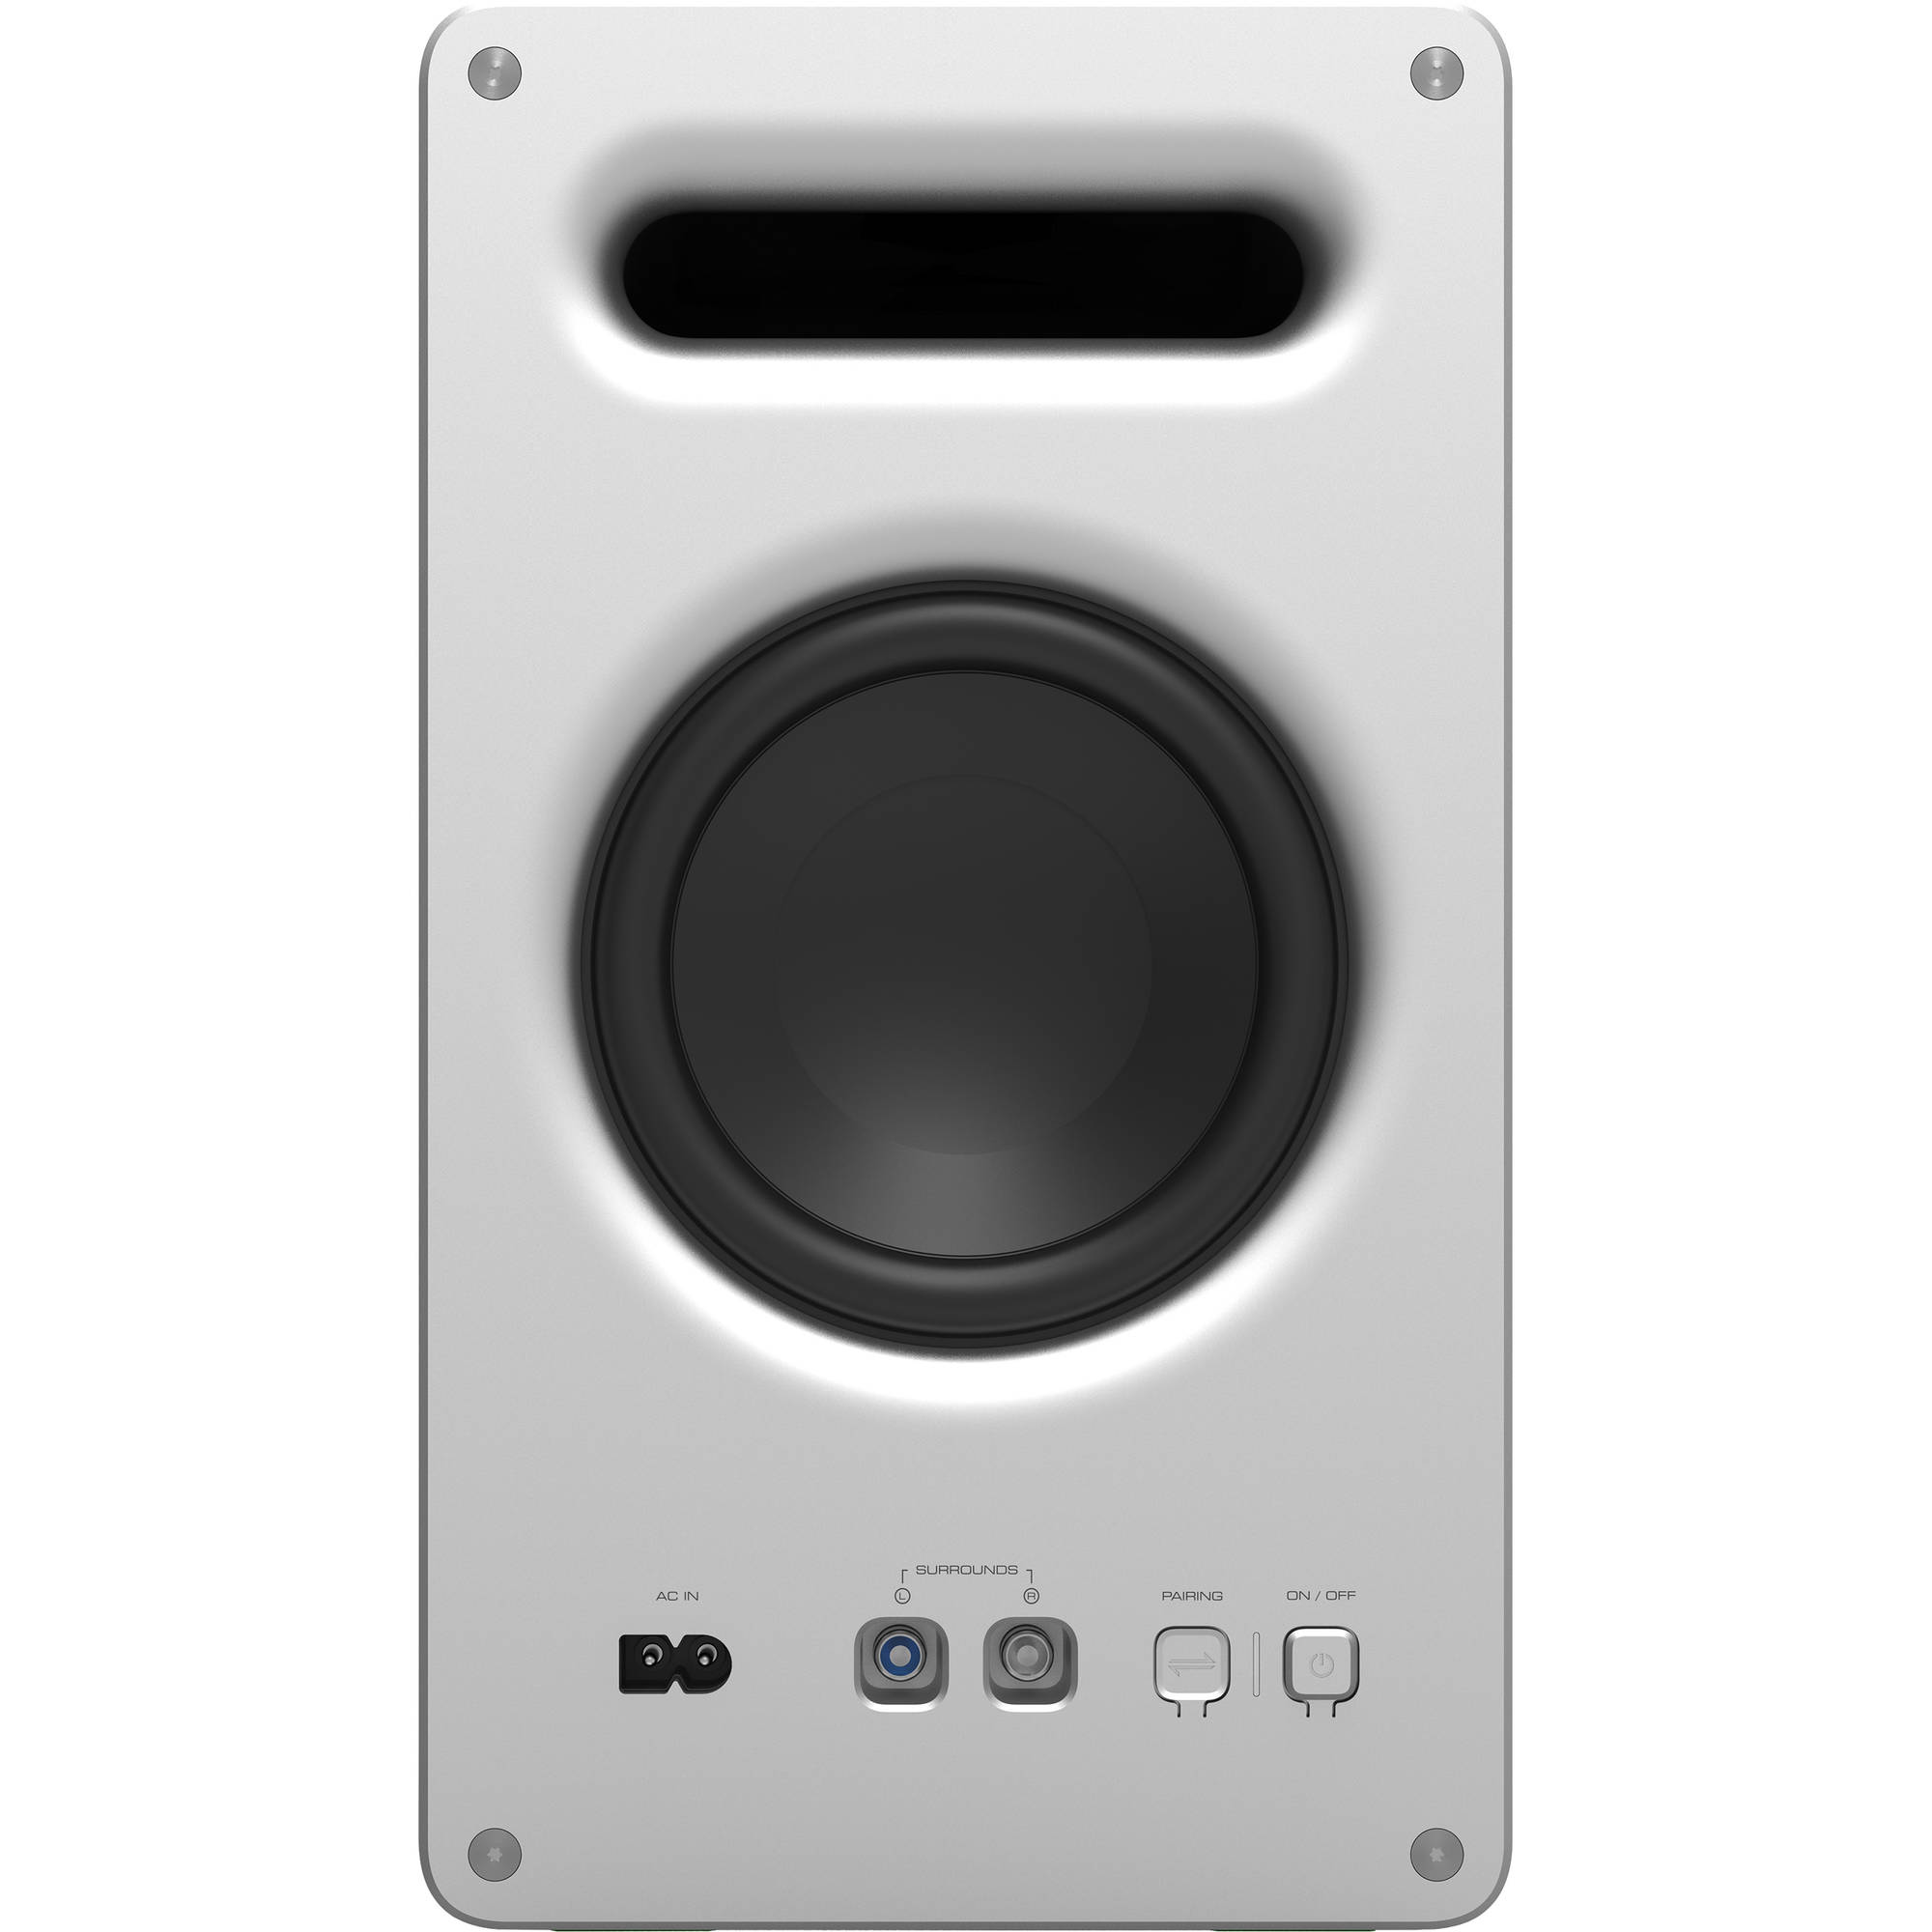 Vizio SR-SB3651-E6B-RB 36" 5.1 Home Theater Sound Bar System - Seller Refurbished